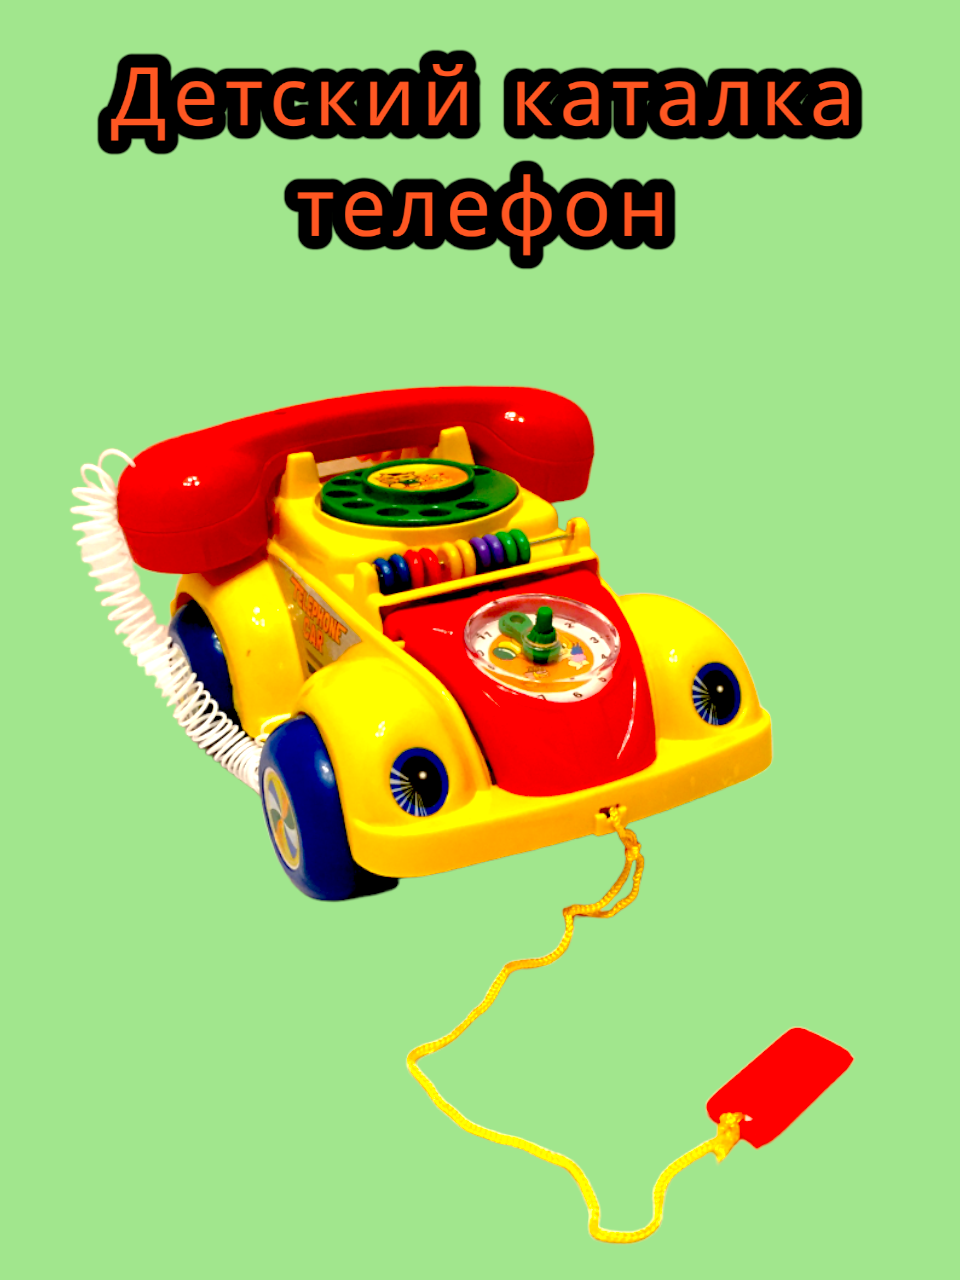 Детский телефон каталка